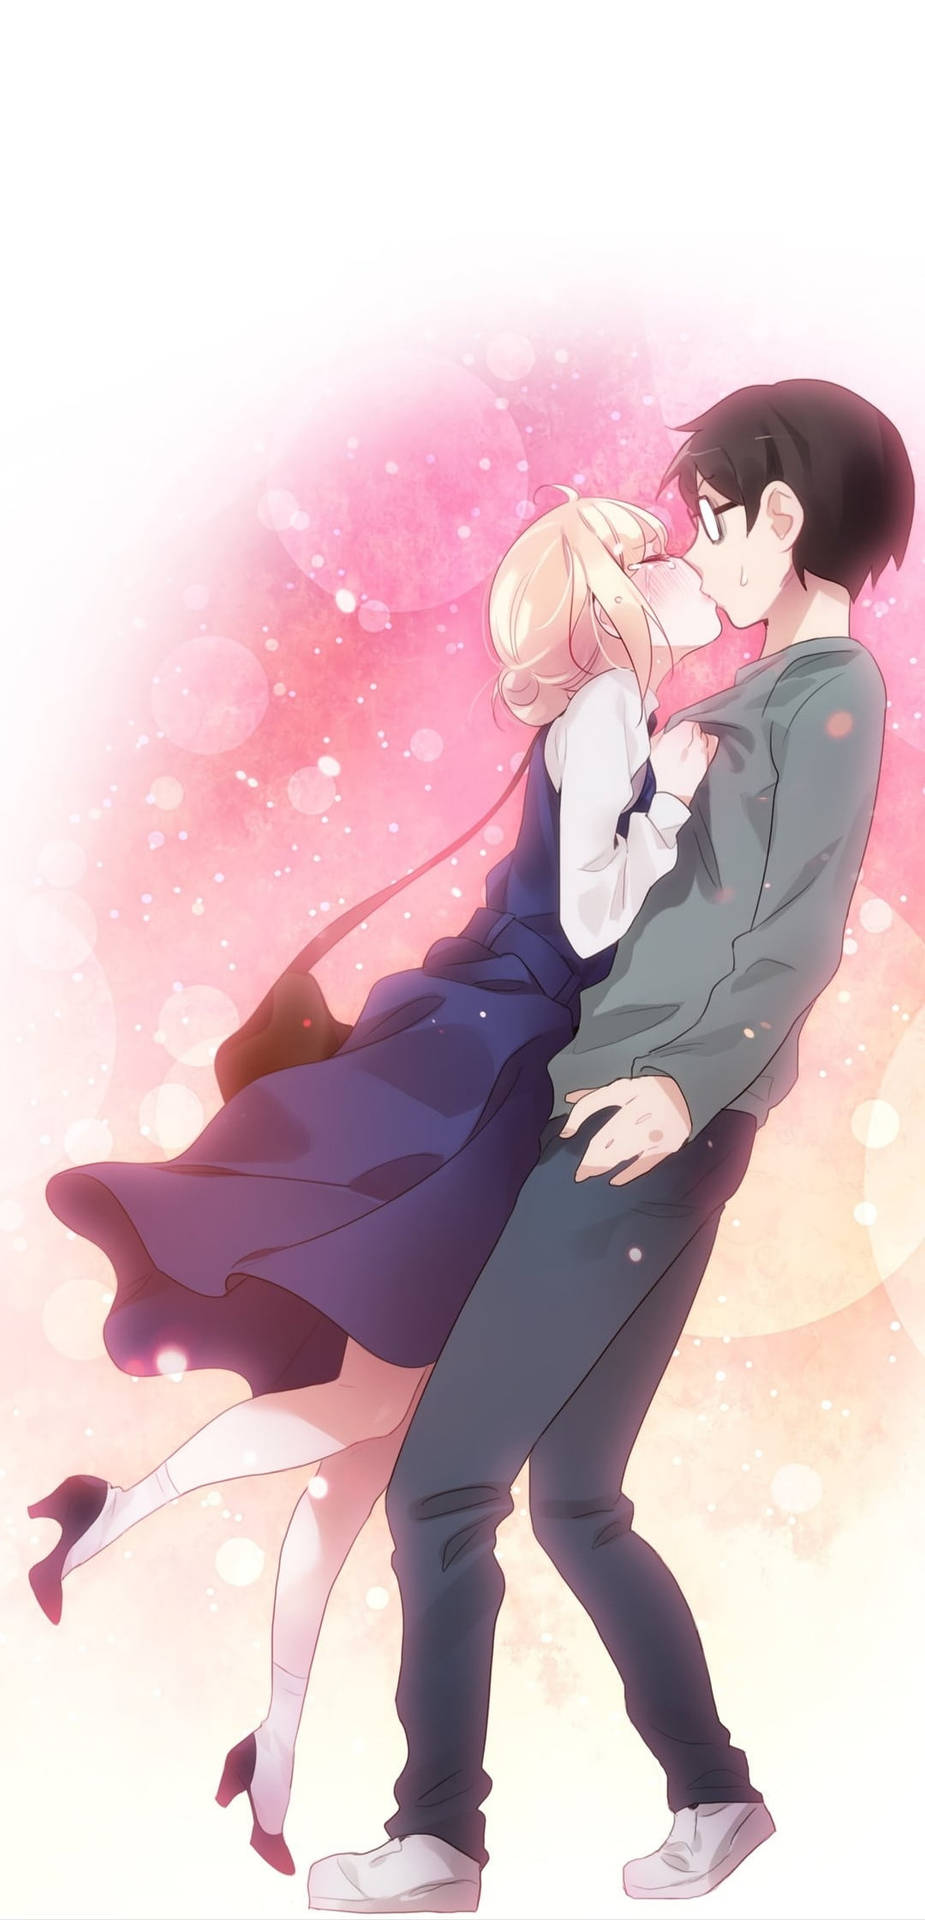 Kissing Aesthetic Anime Couple Wallpaper